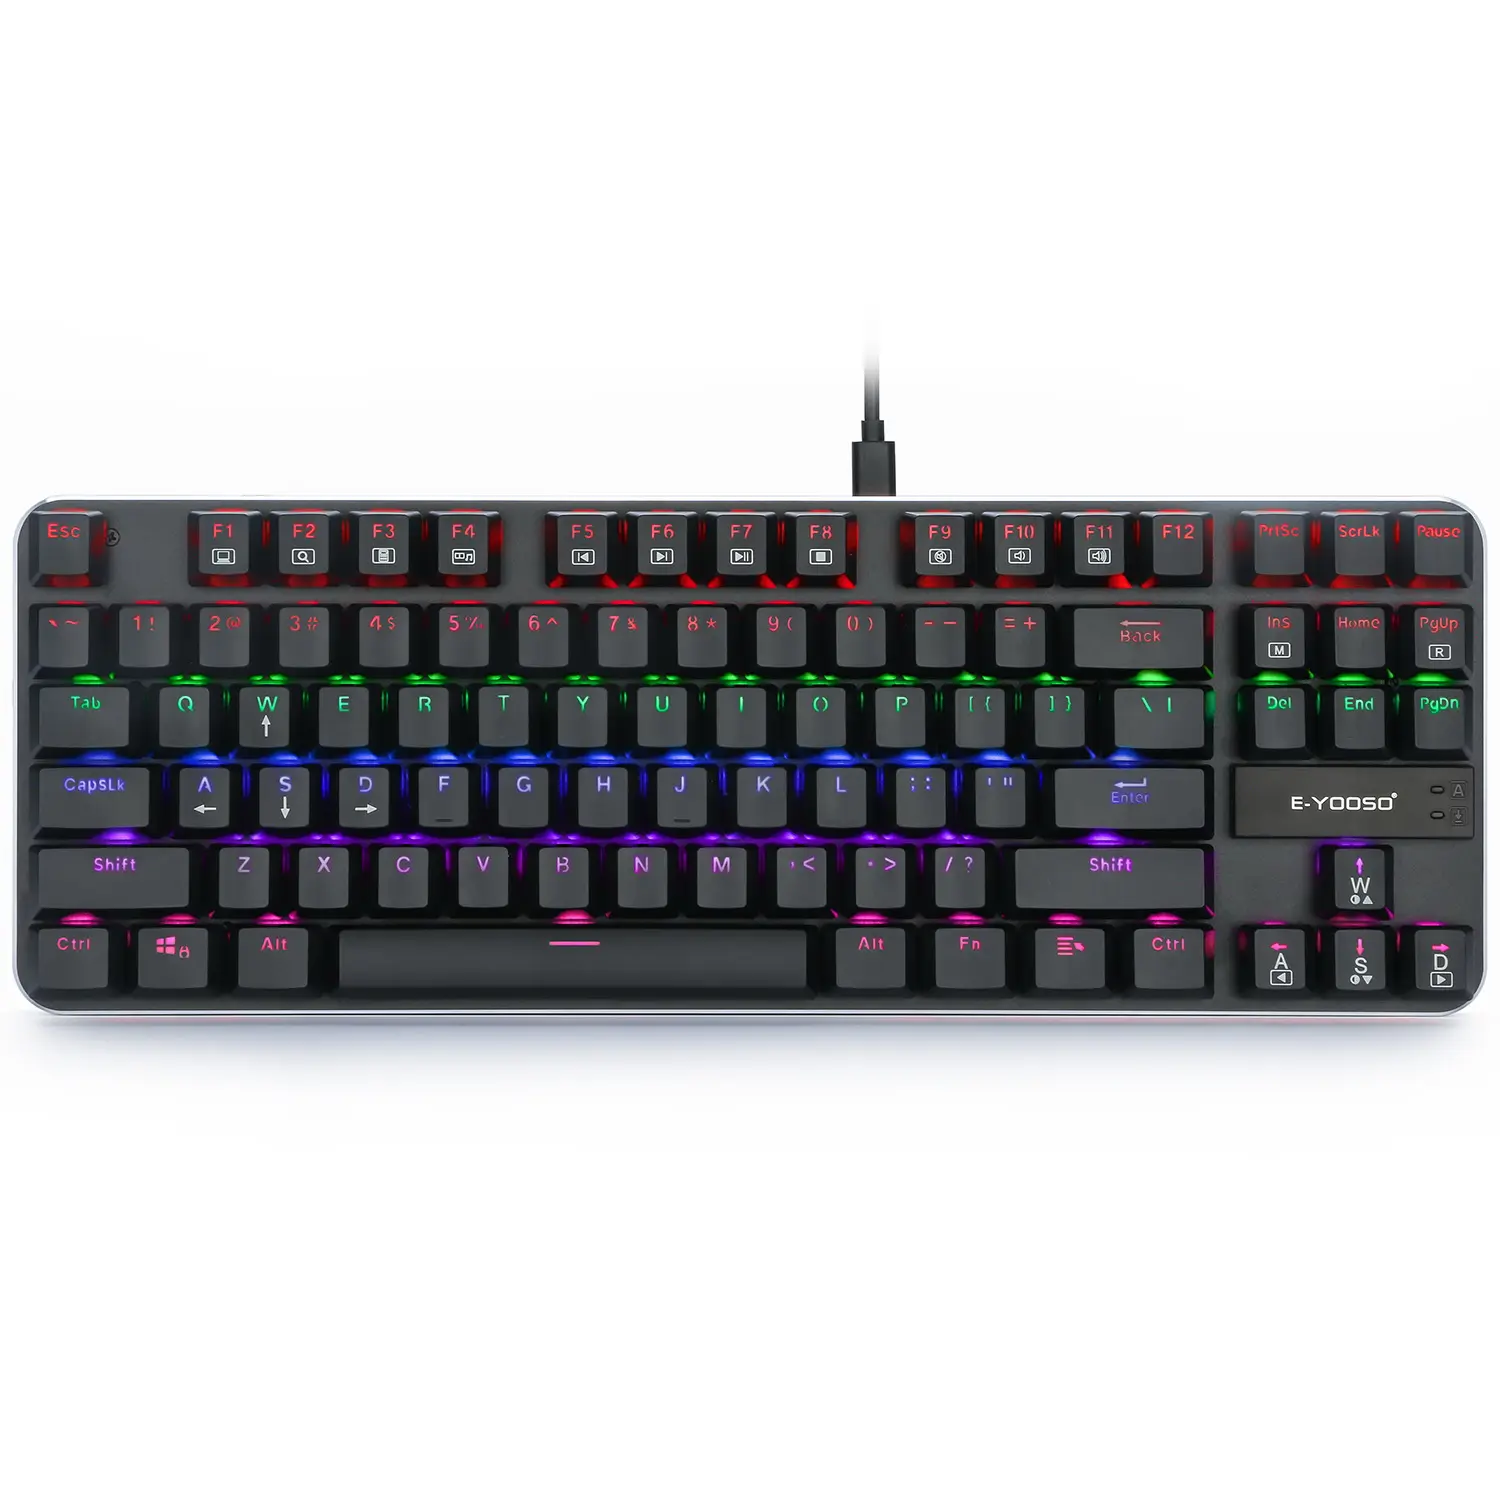 Cheap Price E-yooso K630 Gaming Keyboard 87 Keys RGB Blacklight Hot Swapping Switches Type C Mechanical Keyboard